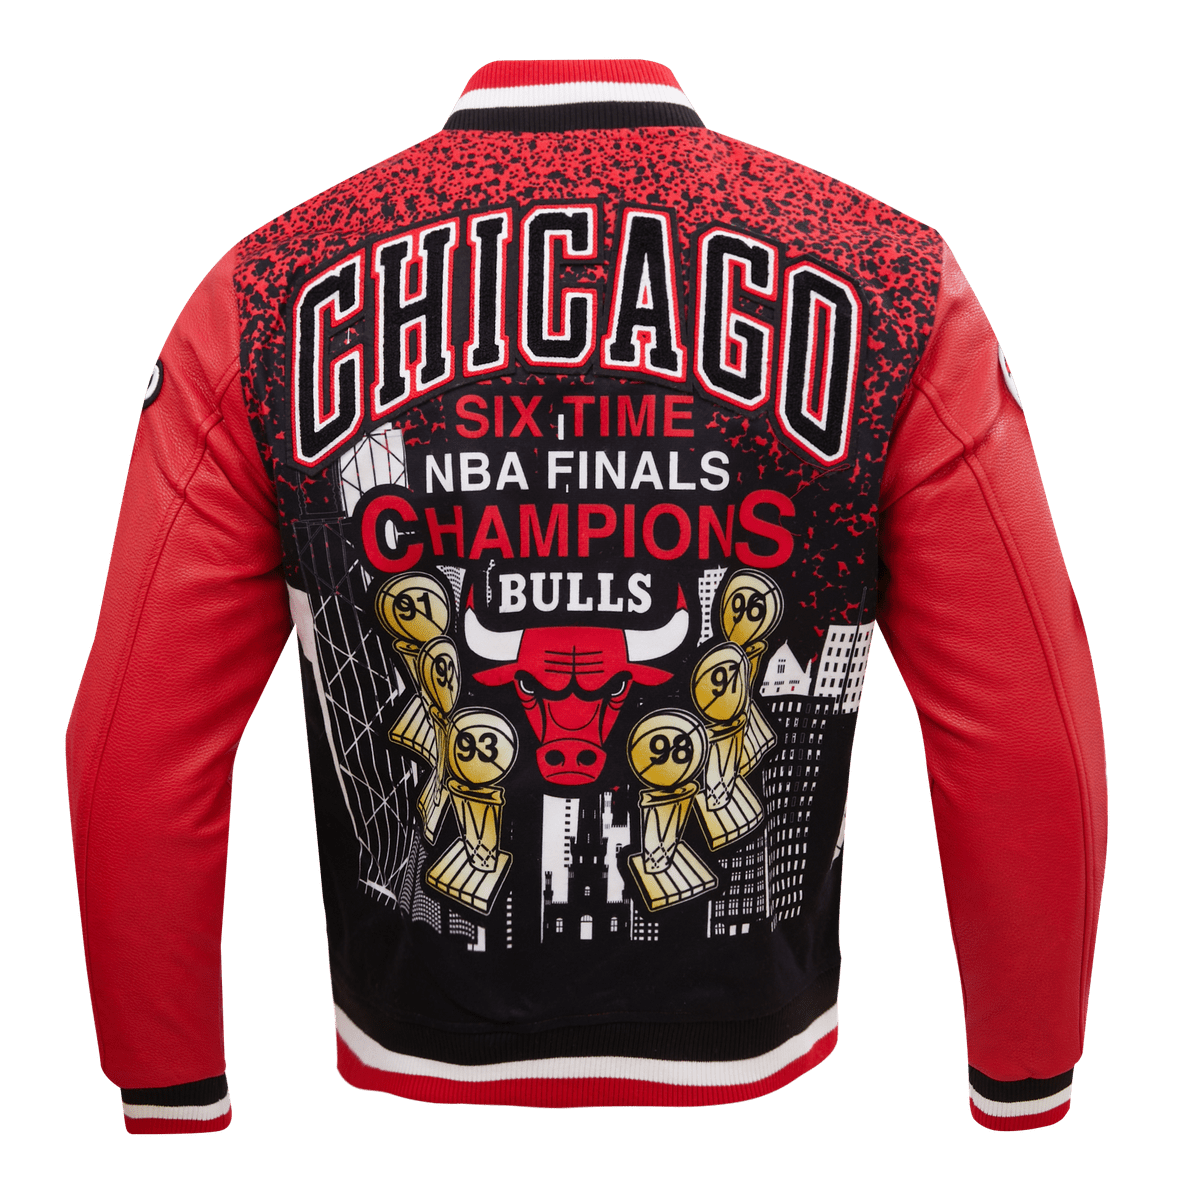 LEGEND CHICAGO BULLS NBA FAN VARSITY JACKET LIMITED EDITION - NEW ARRIVAL